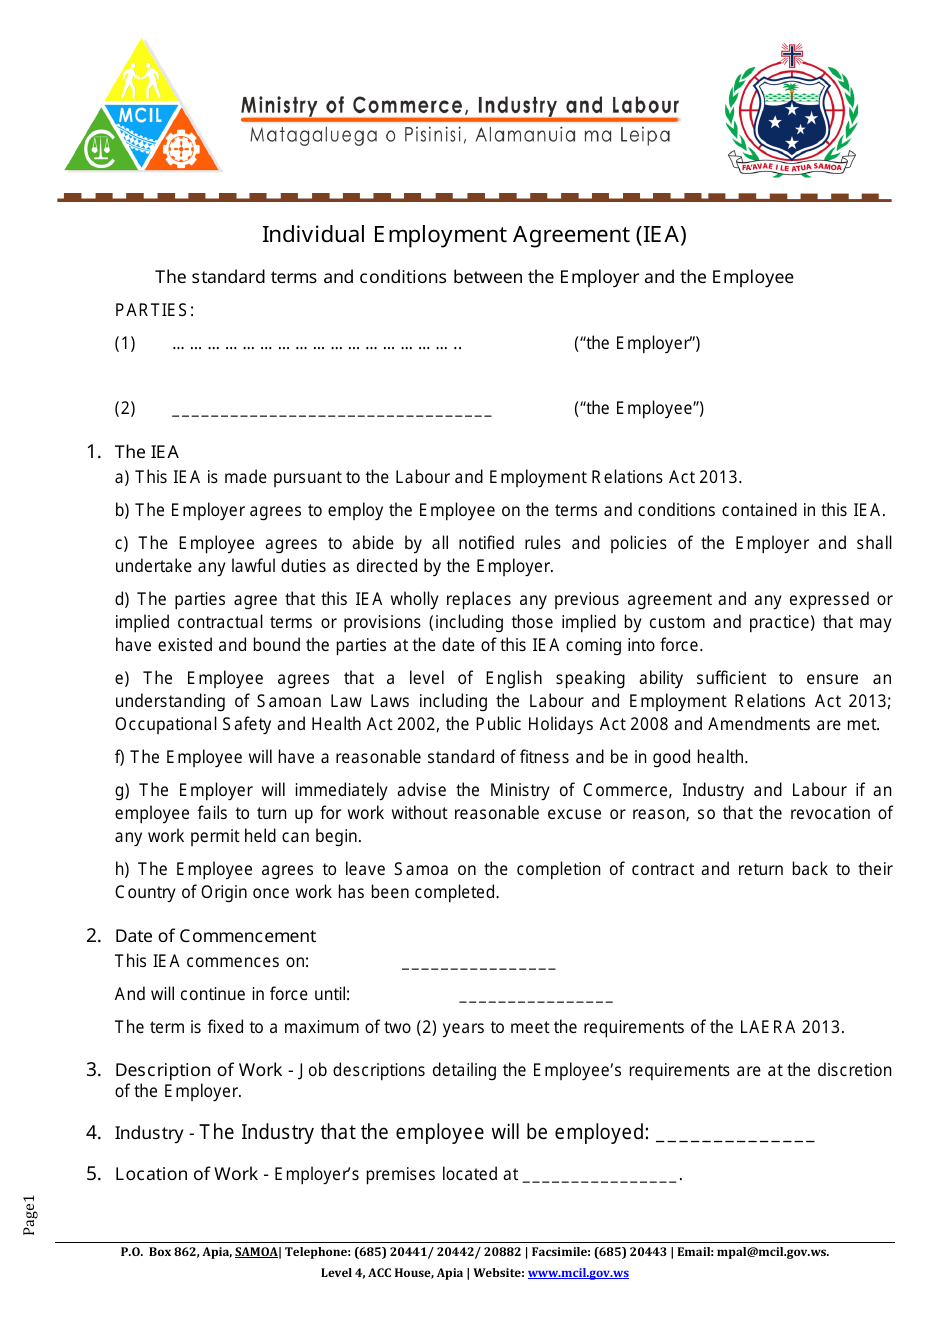 Individual Employment Agreement (Iea) - Samoa, Page 1